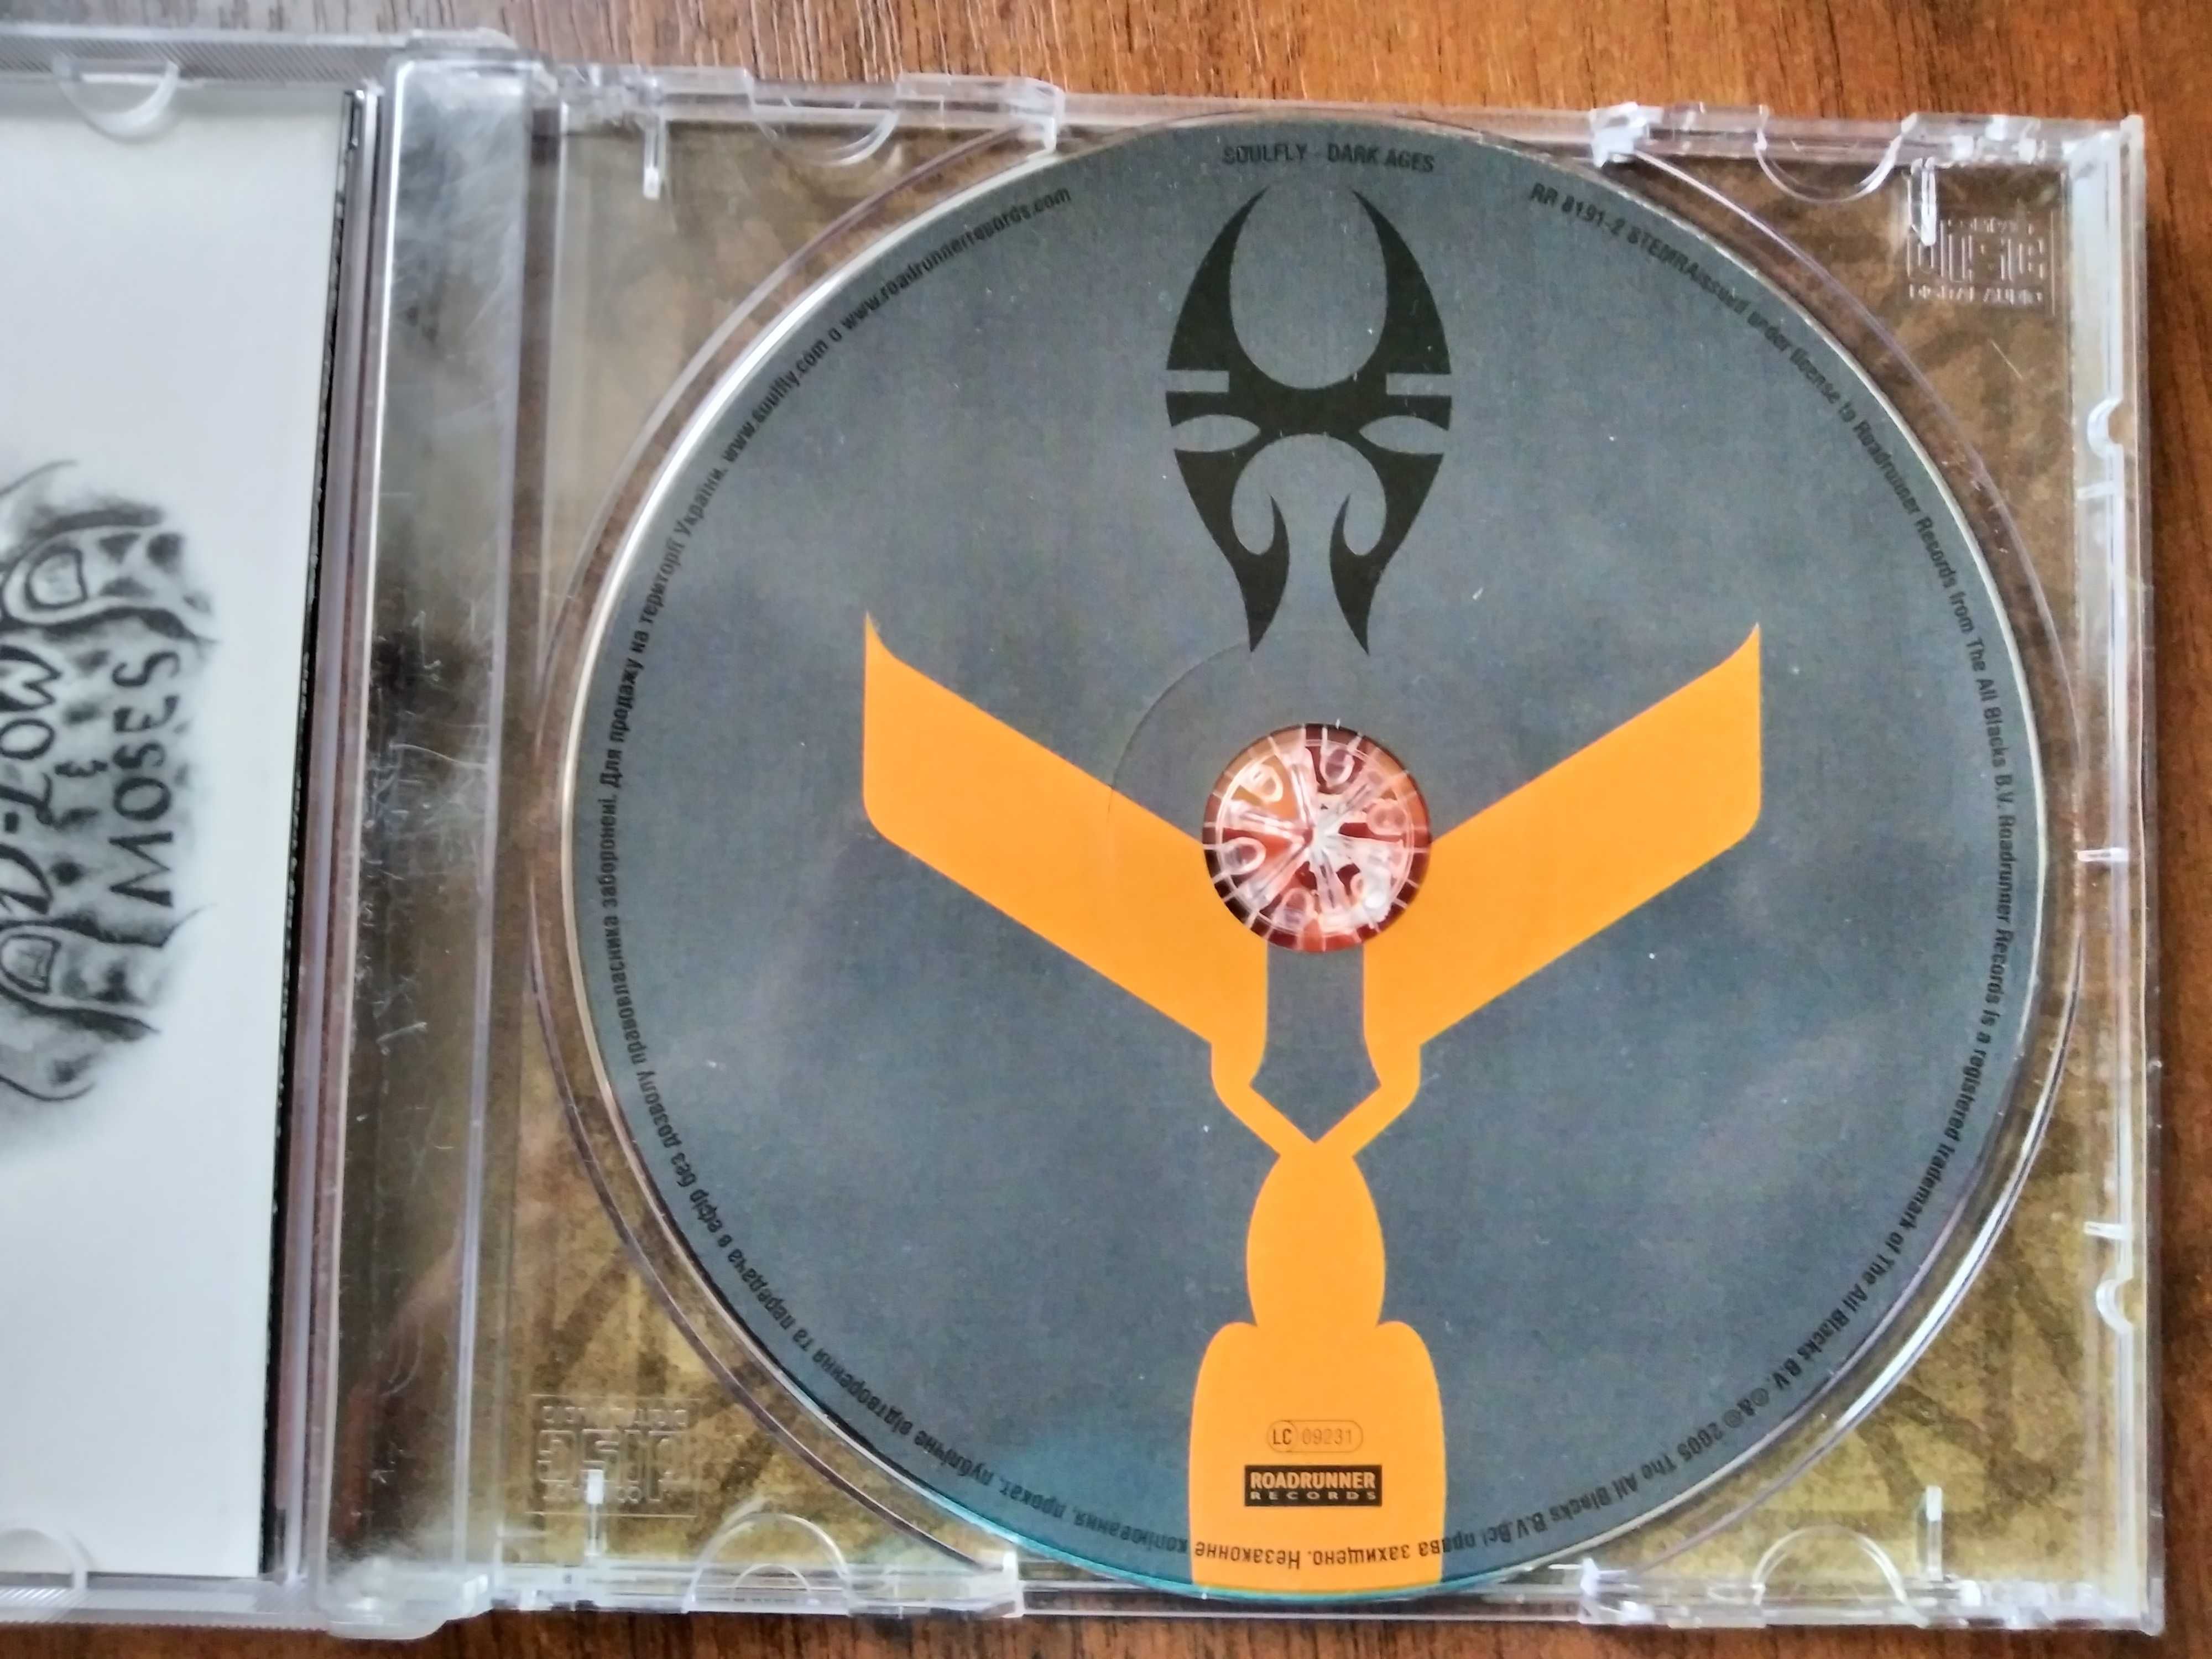 Soulfly – Dark Ages (2005), лиц. MOON Records,буклет-гармошка 10 стр.